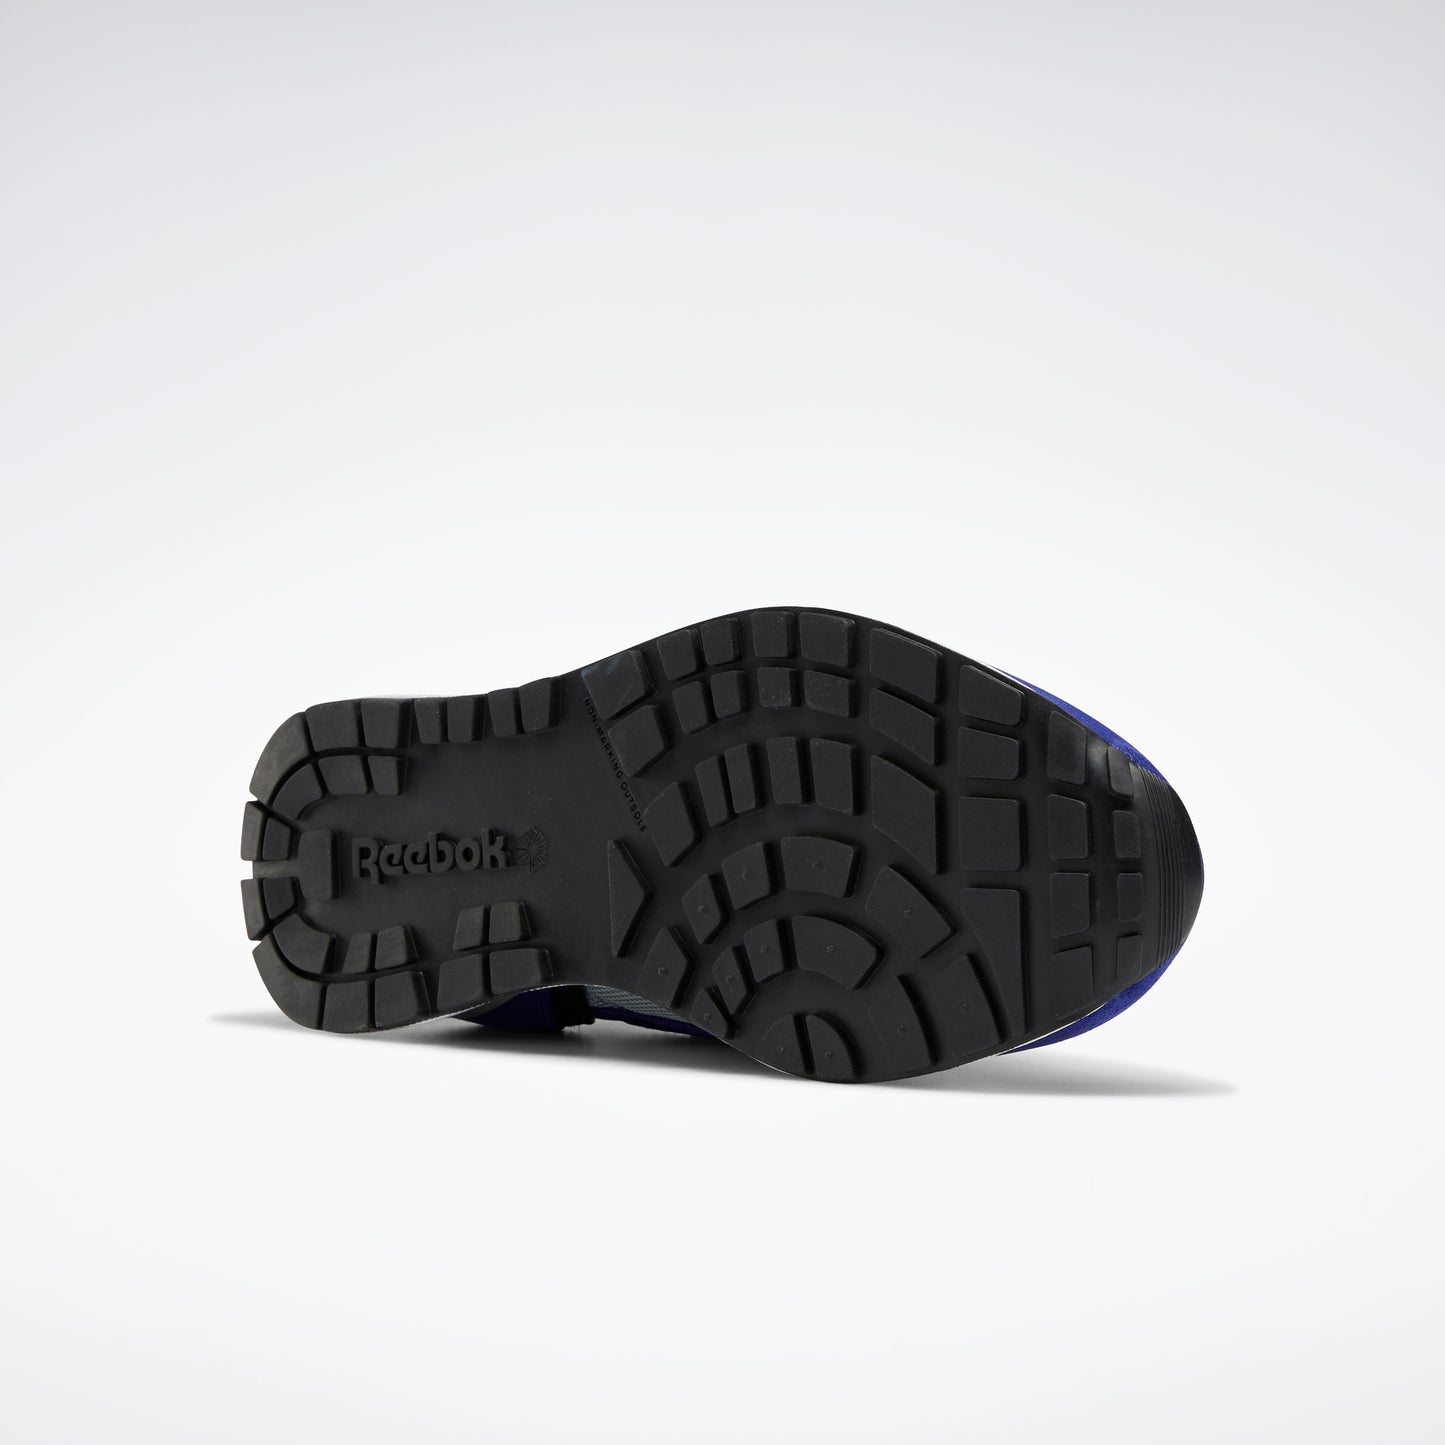 Reebok Footwear Men Lx8500 Shoes Bolprp/Pugry3/Cblack